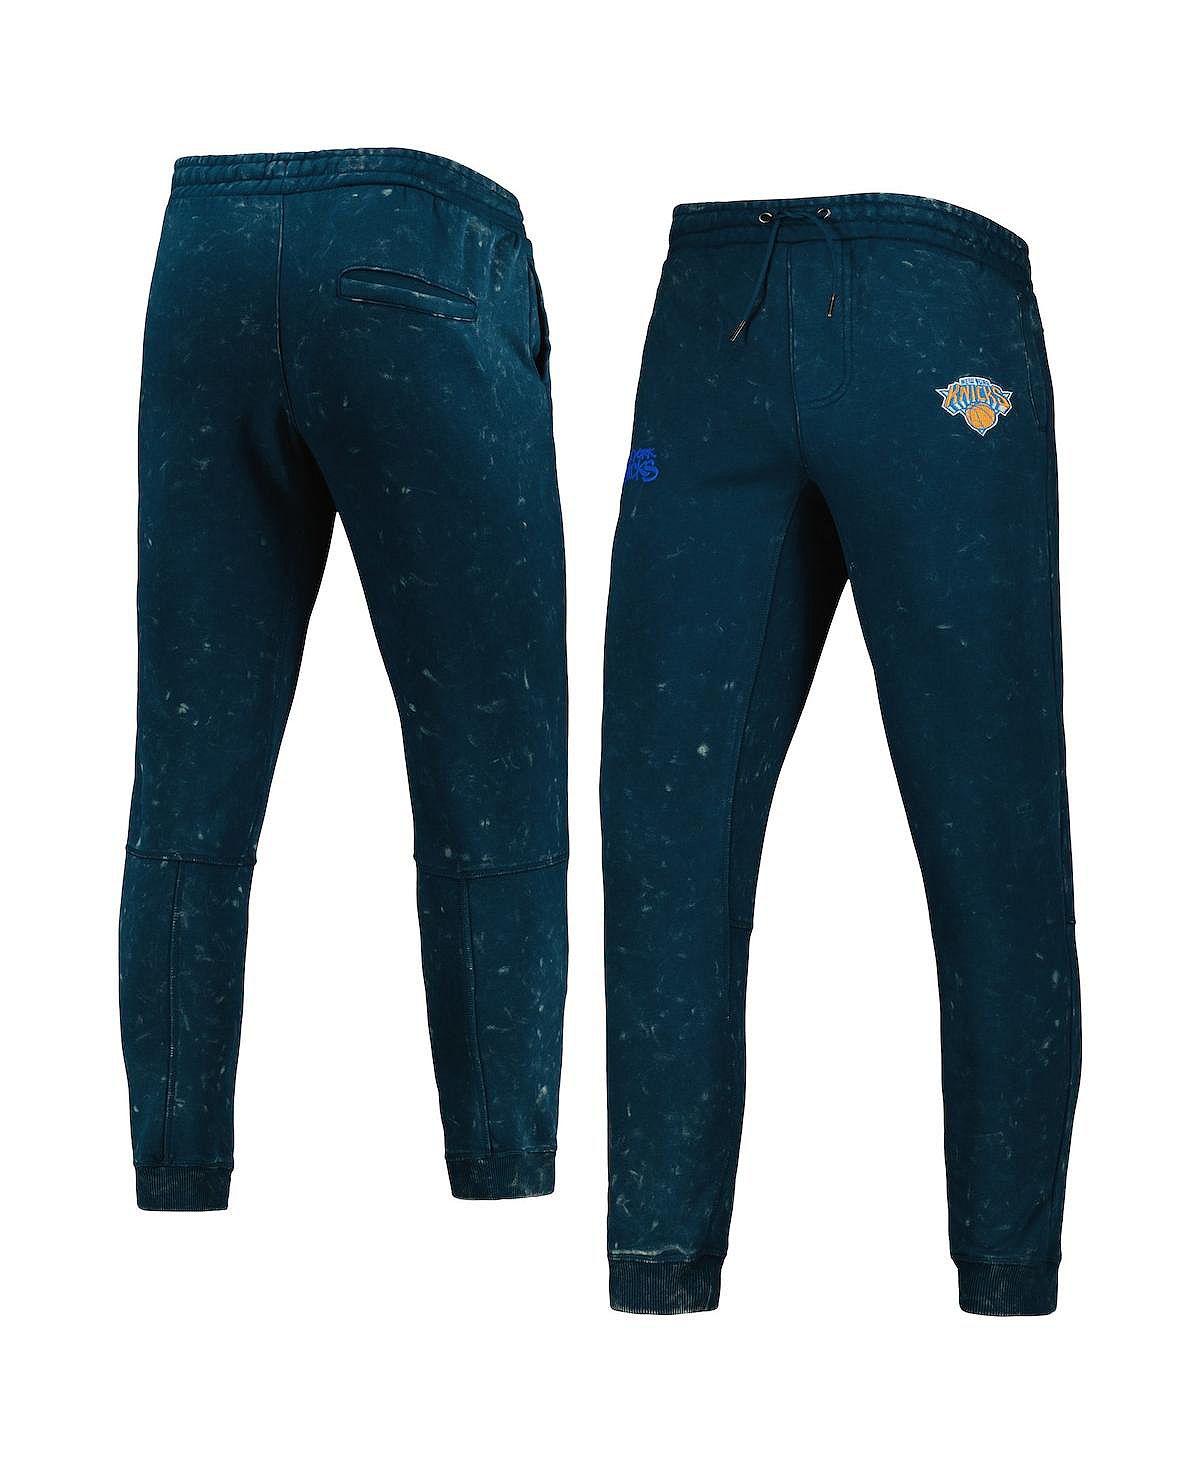 Мужские и женские синие брюки для бега в тон кислотного цвета New York Knicks The Wild Collective